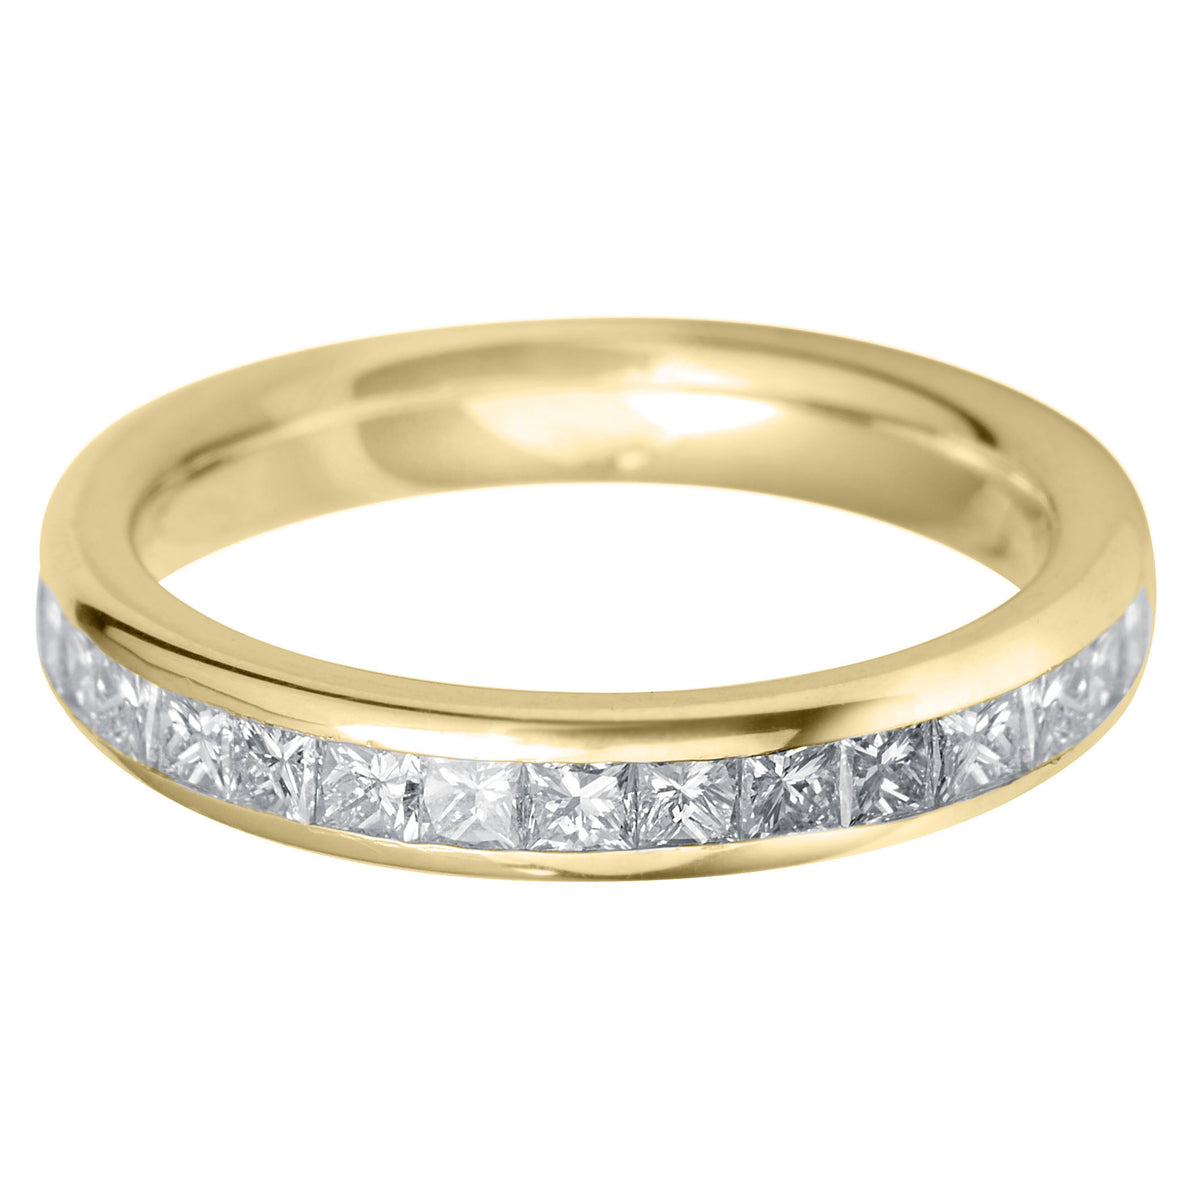 Princess square court diamond channel set eternity ring